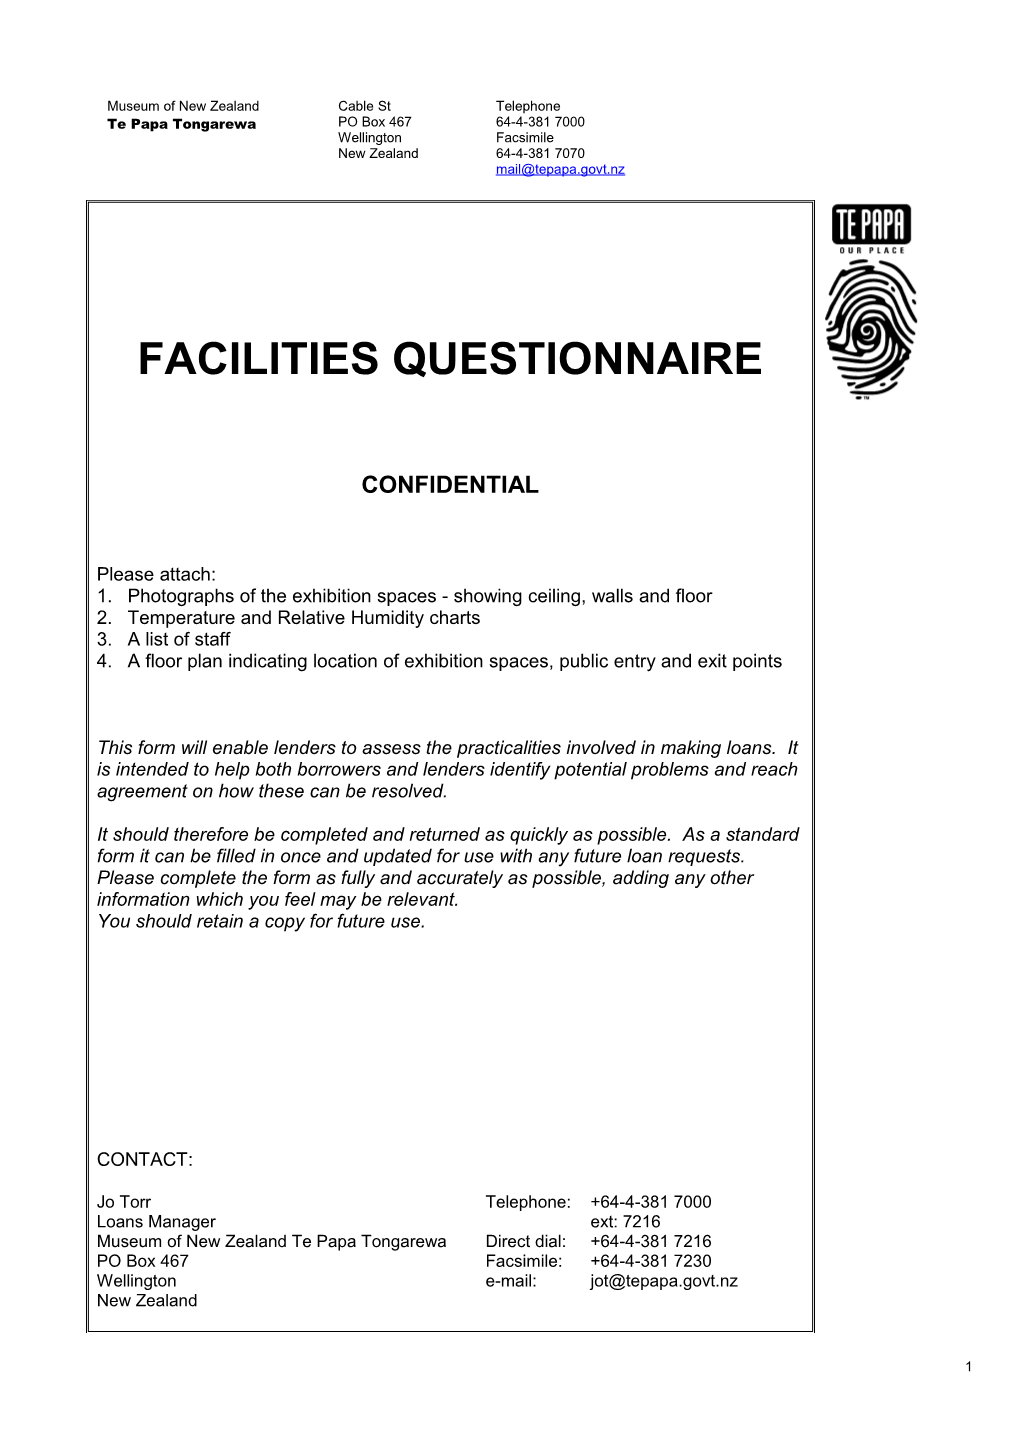 Te Papa Facilities Questionnaire